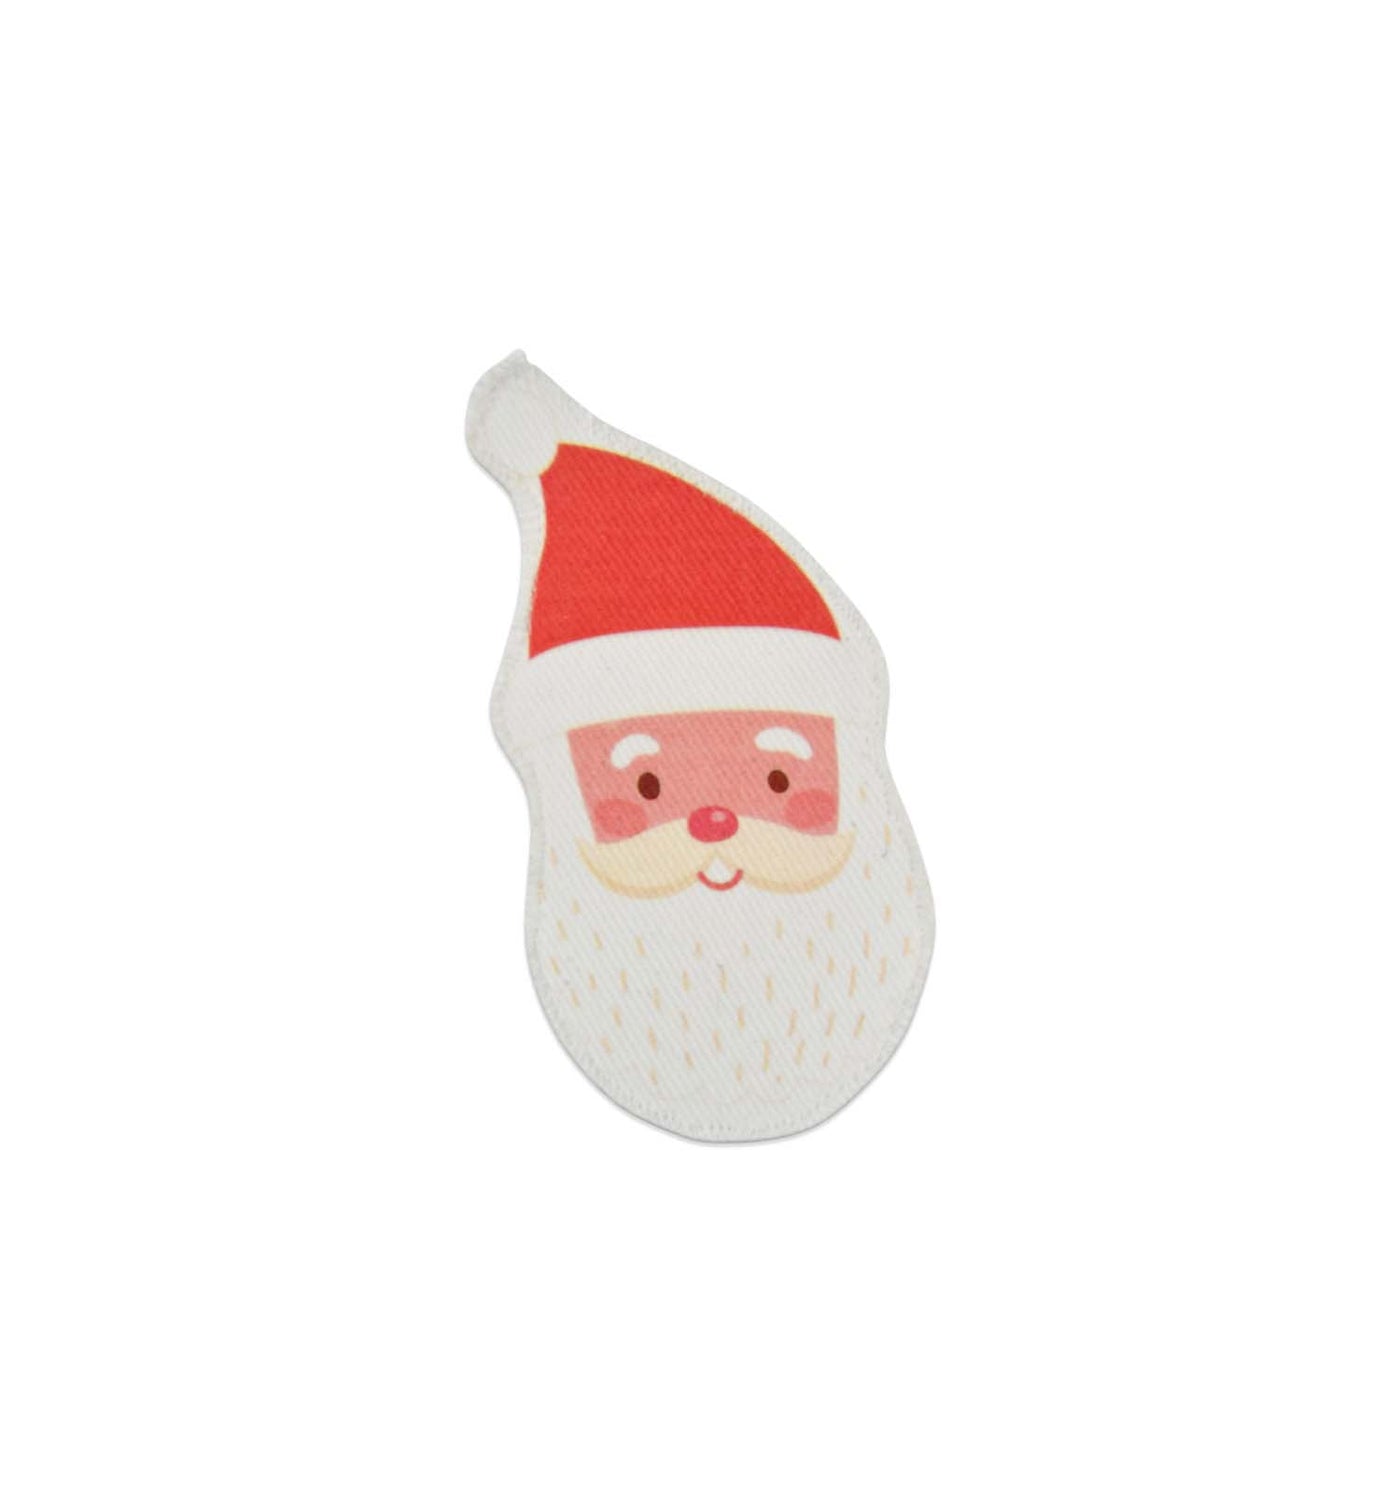 Applikation Santa Clause | sticklett Online Store.